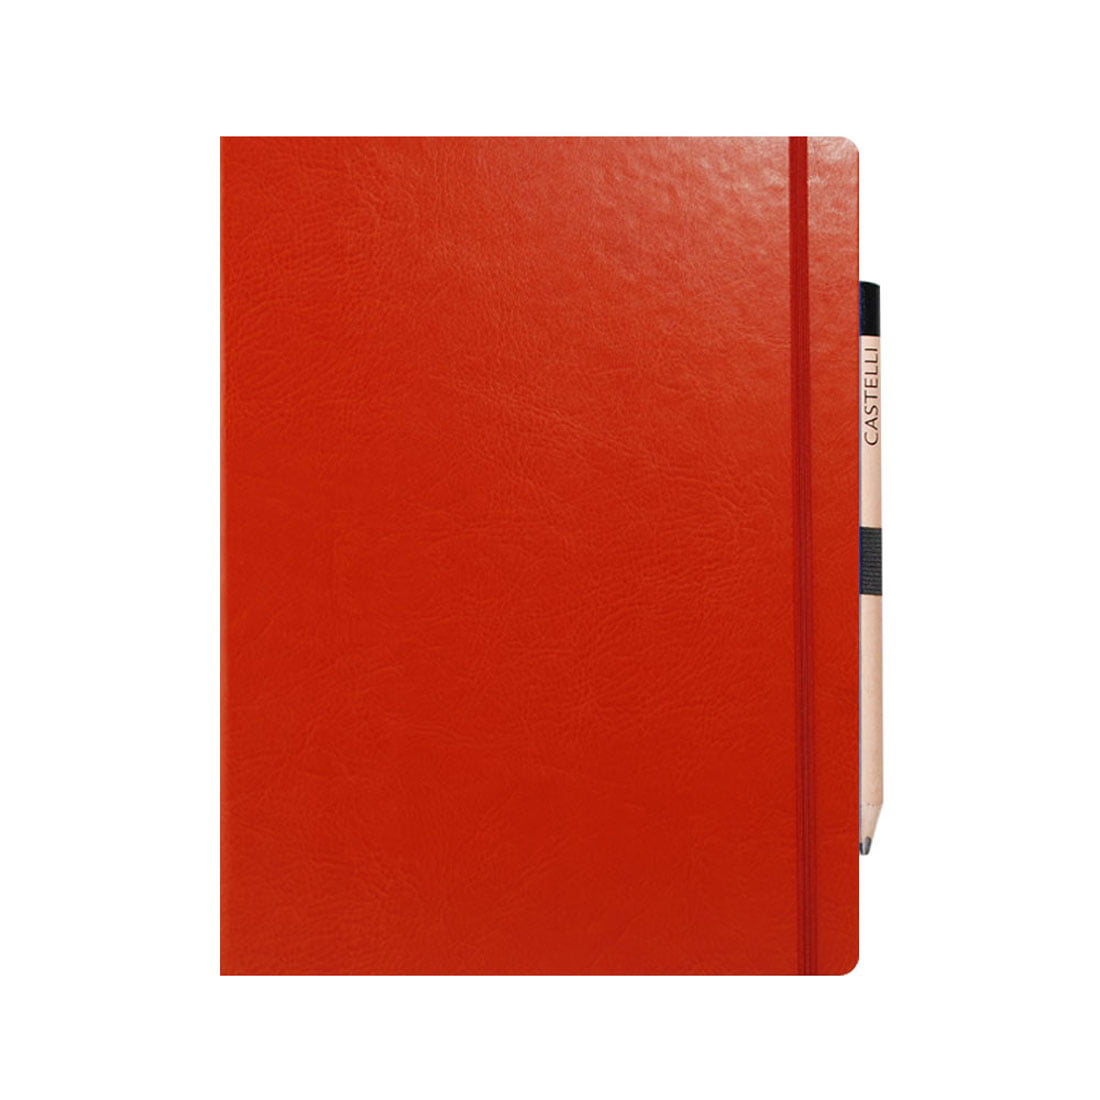 Castelli World Travel Journal - Ruled - Pearl Red, U68/24W-364